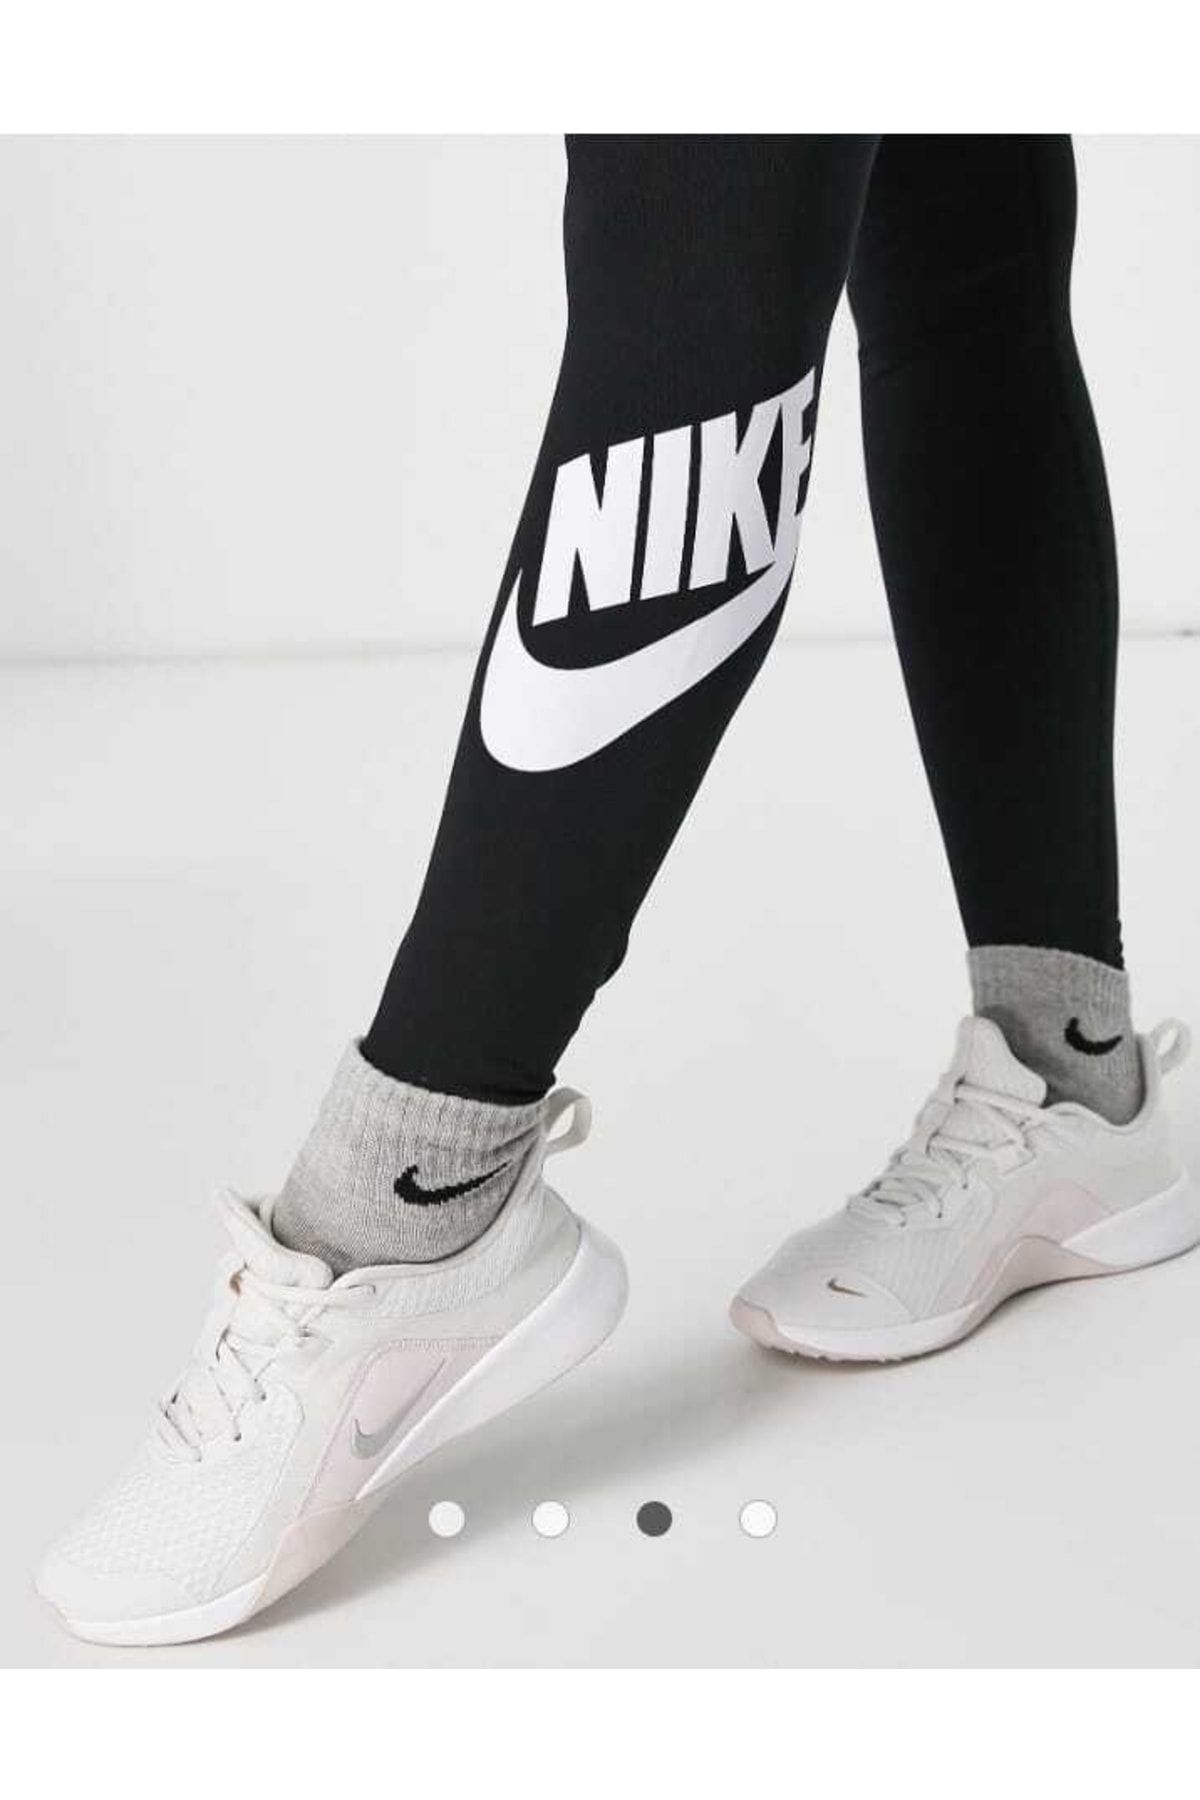 Baskılı Sweat 🌿300₺🌿 Nike Tayt 🖤110₺🖤 Taytım s-m-l-xl beden